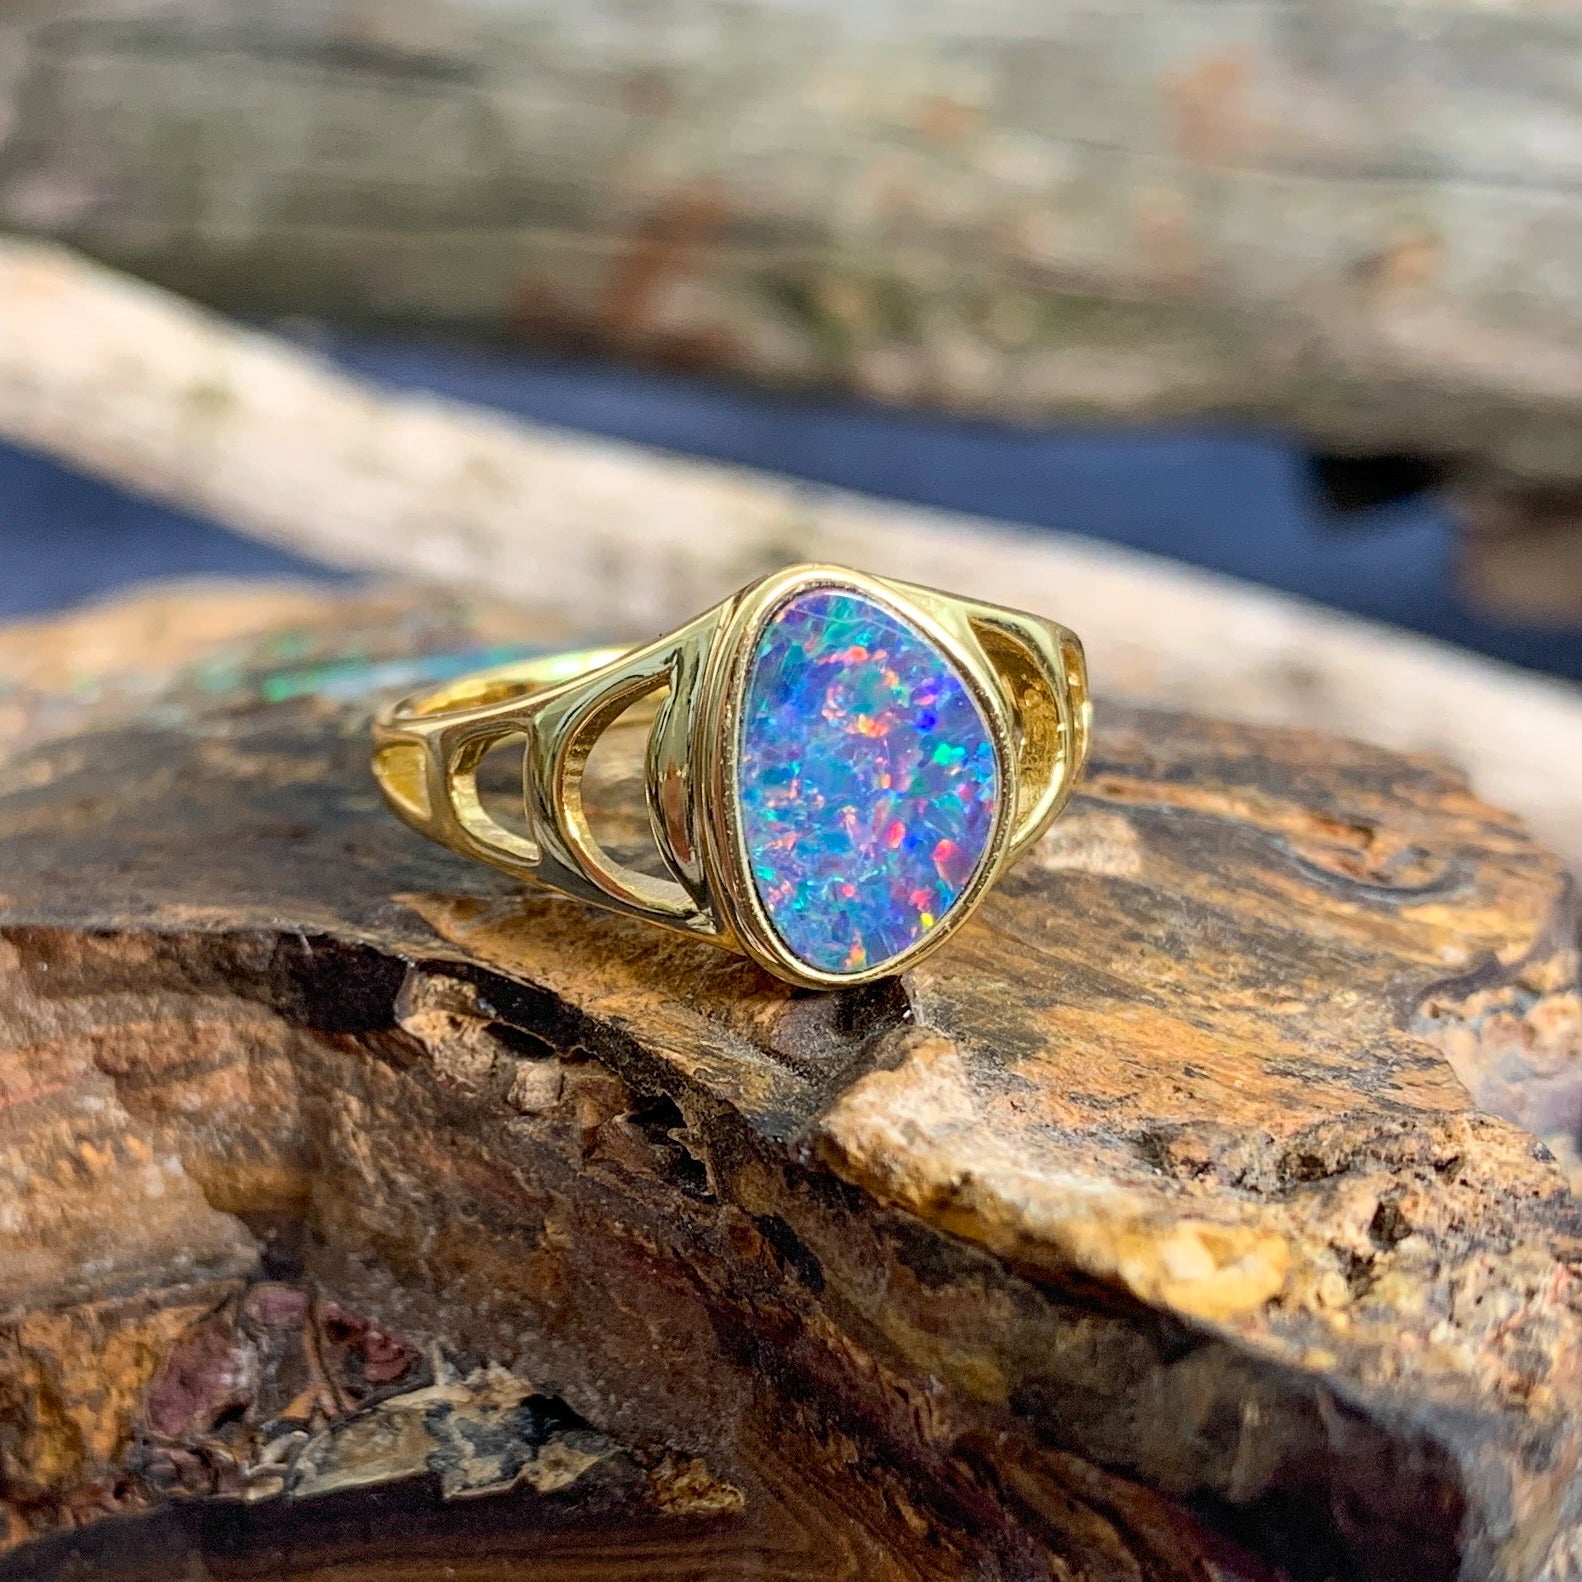 Gold Plated Silver Opal doublet freeform patterned ring - Masterpiece Jewellery Opal & Gems Sydney Australia | Online Shop